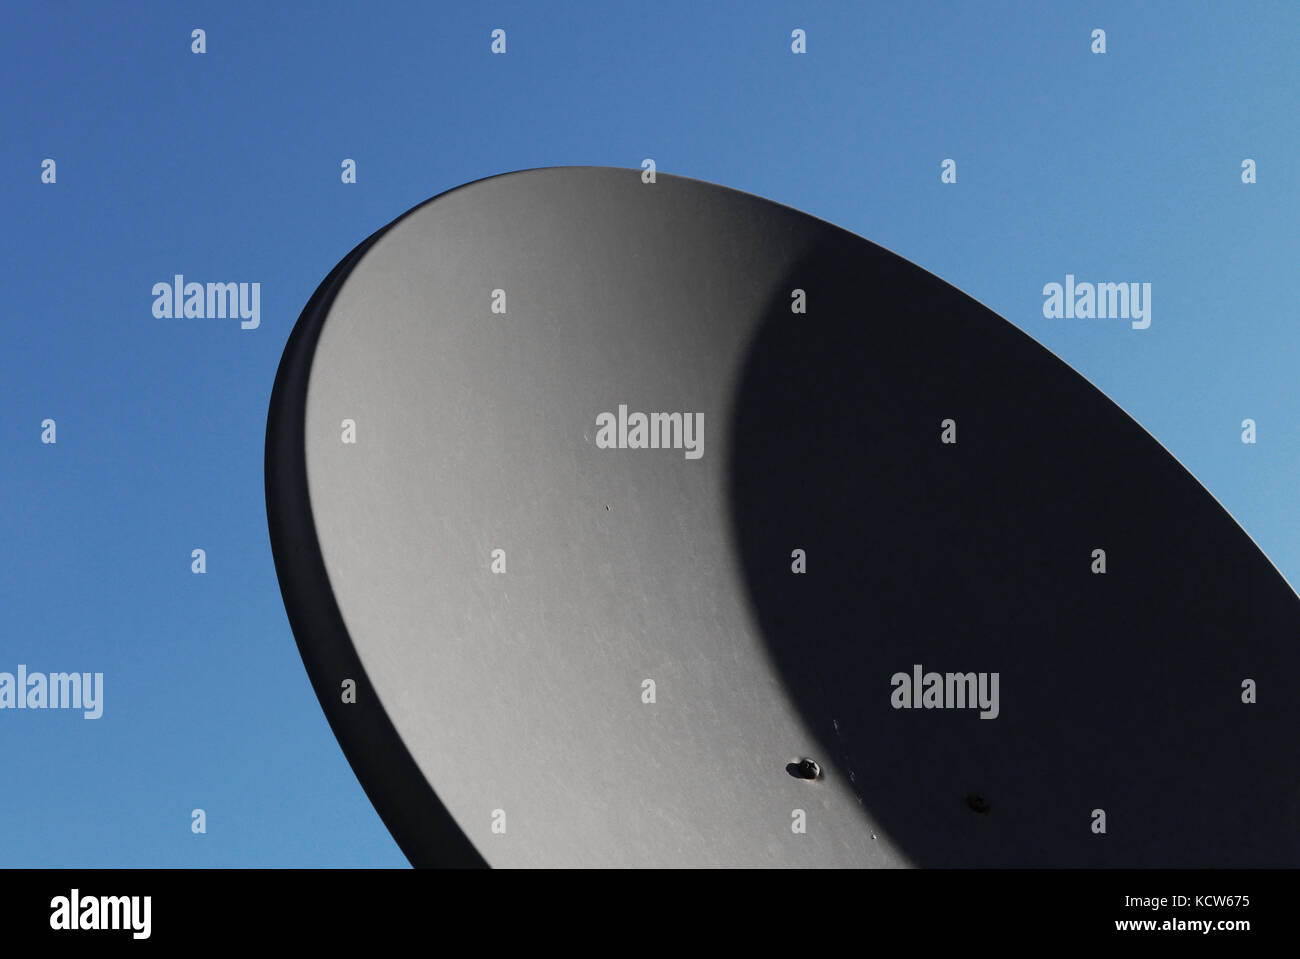 satellite dish against bue sky Stock Photo